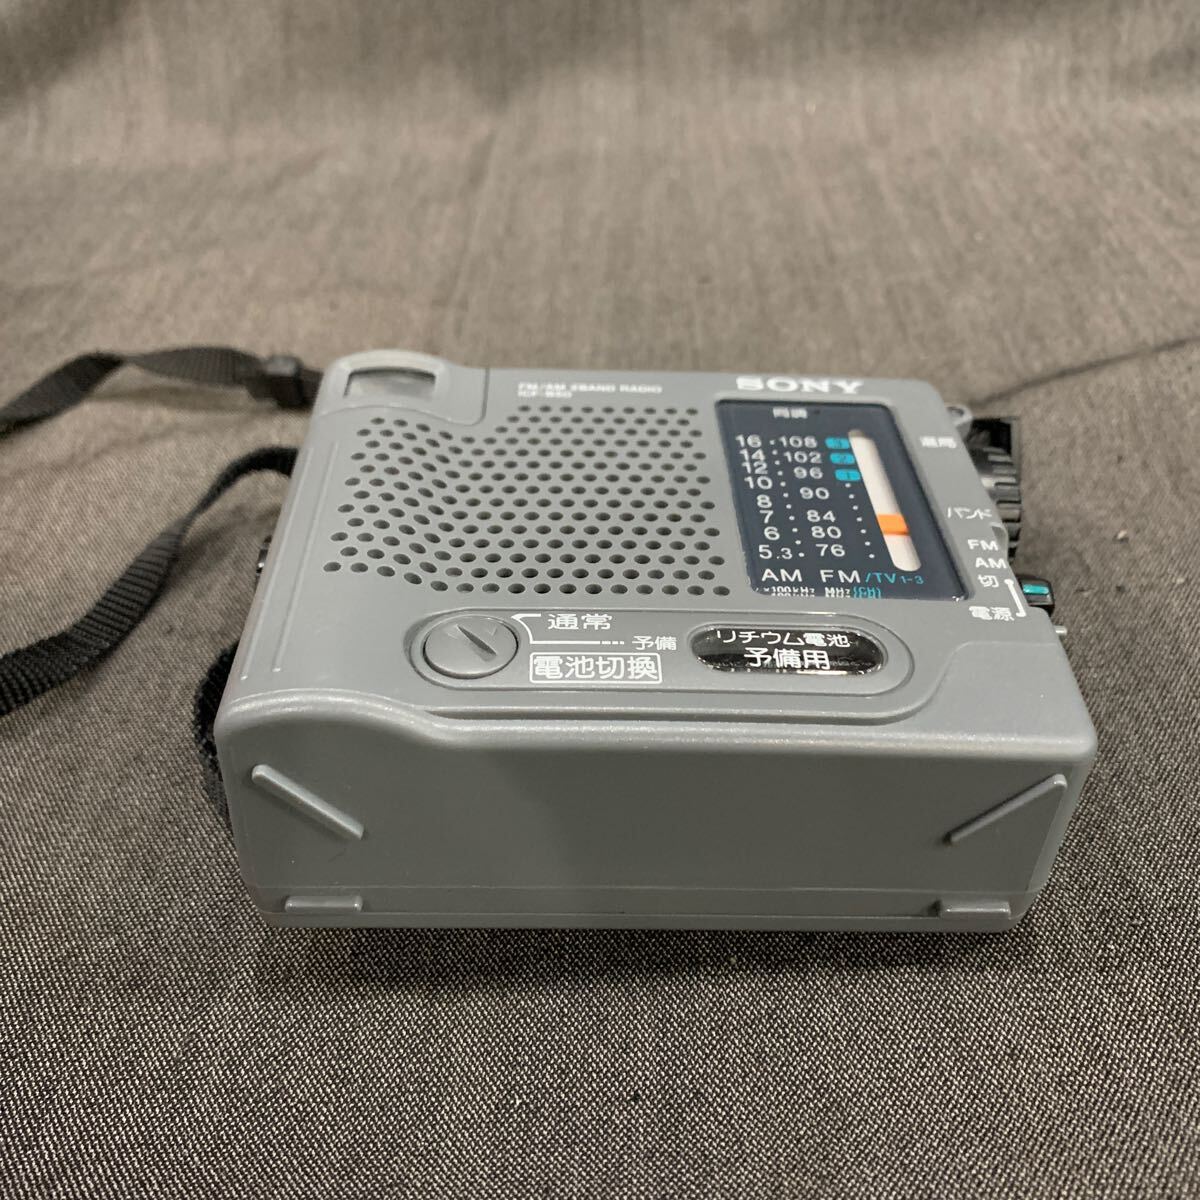 SONY Sony ICF-850 маленький размер FM|AM радио .